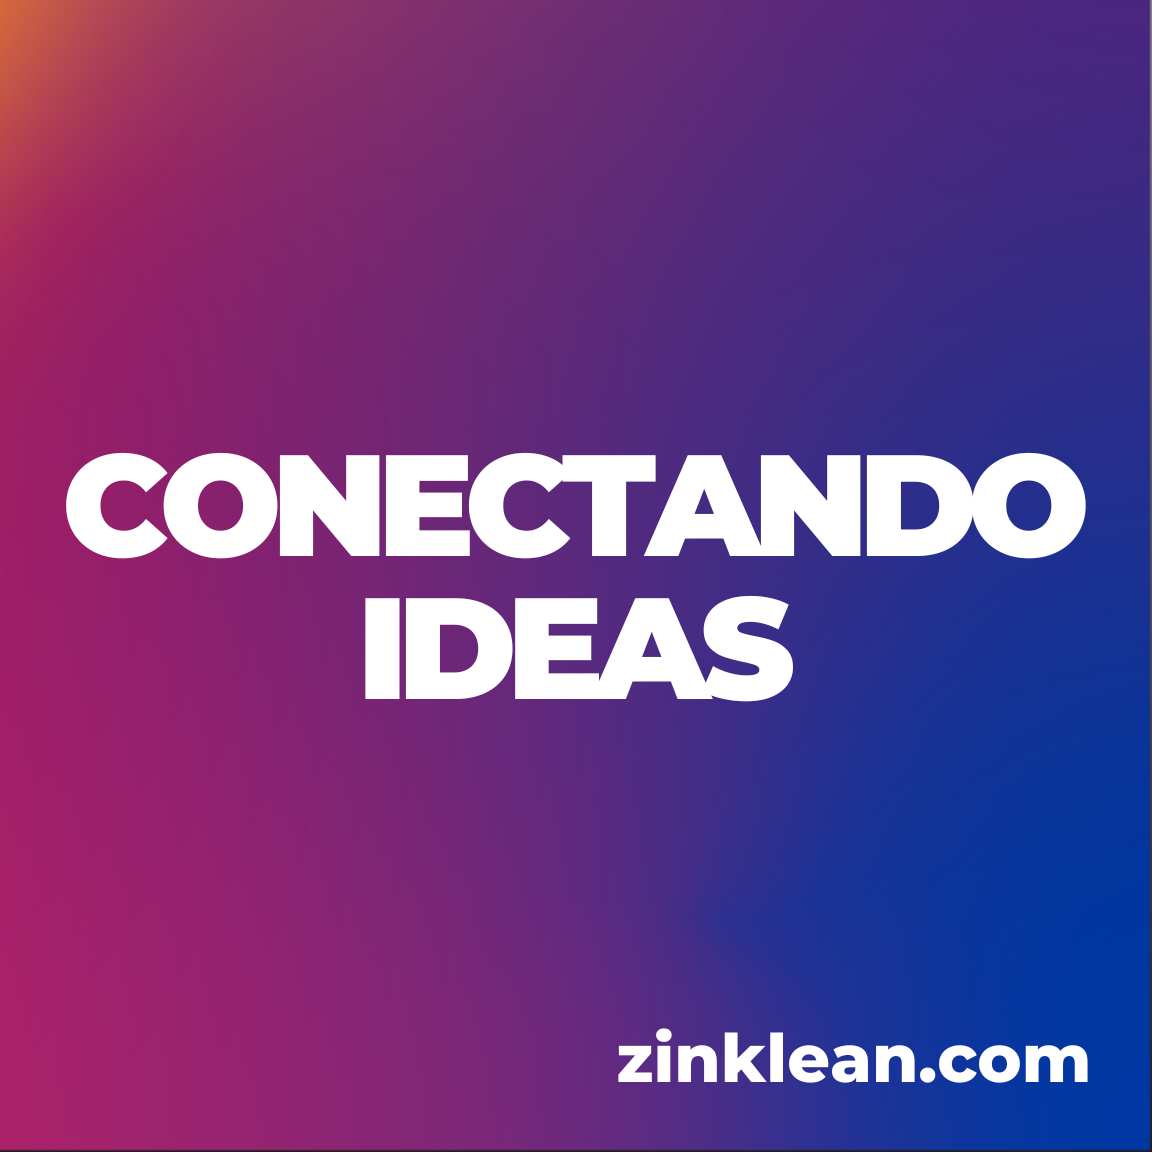 Conectando ideas